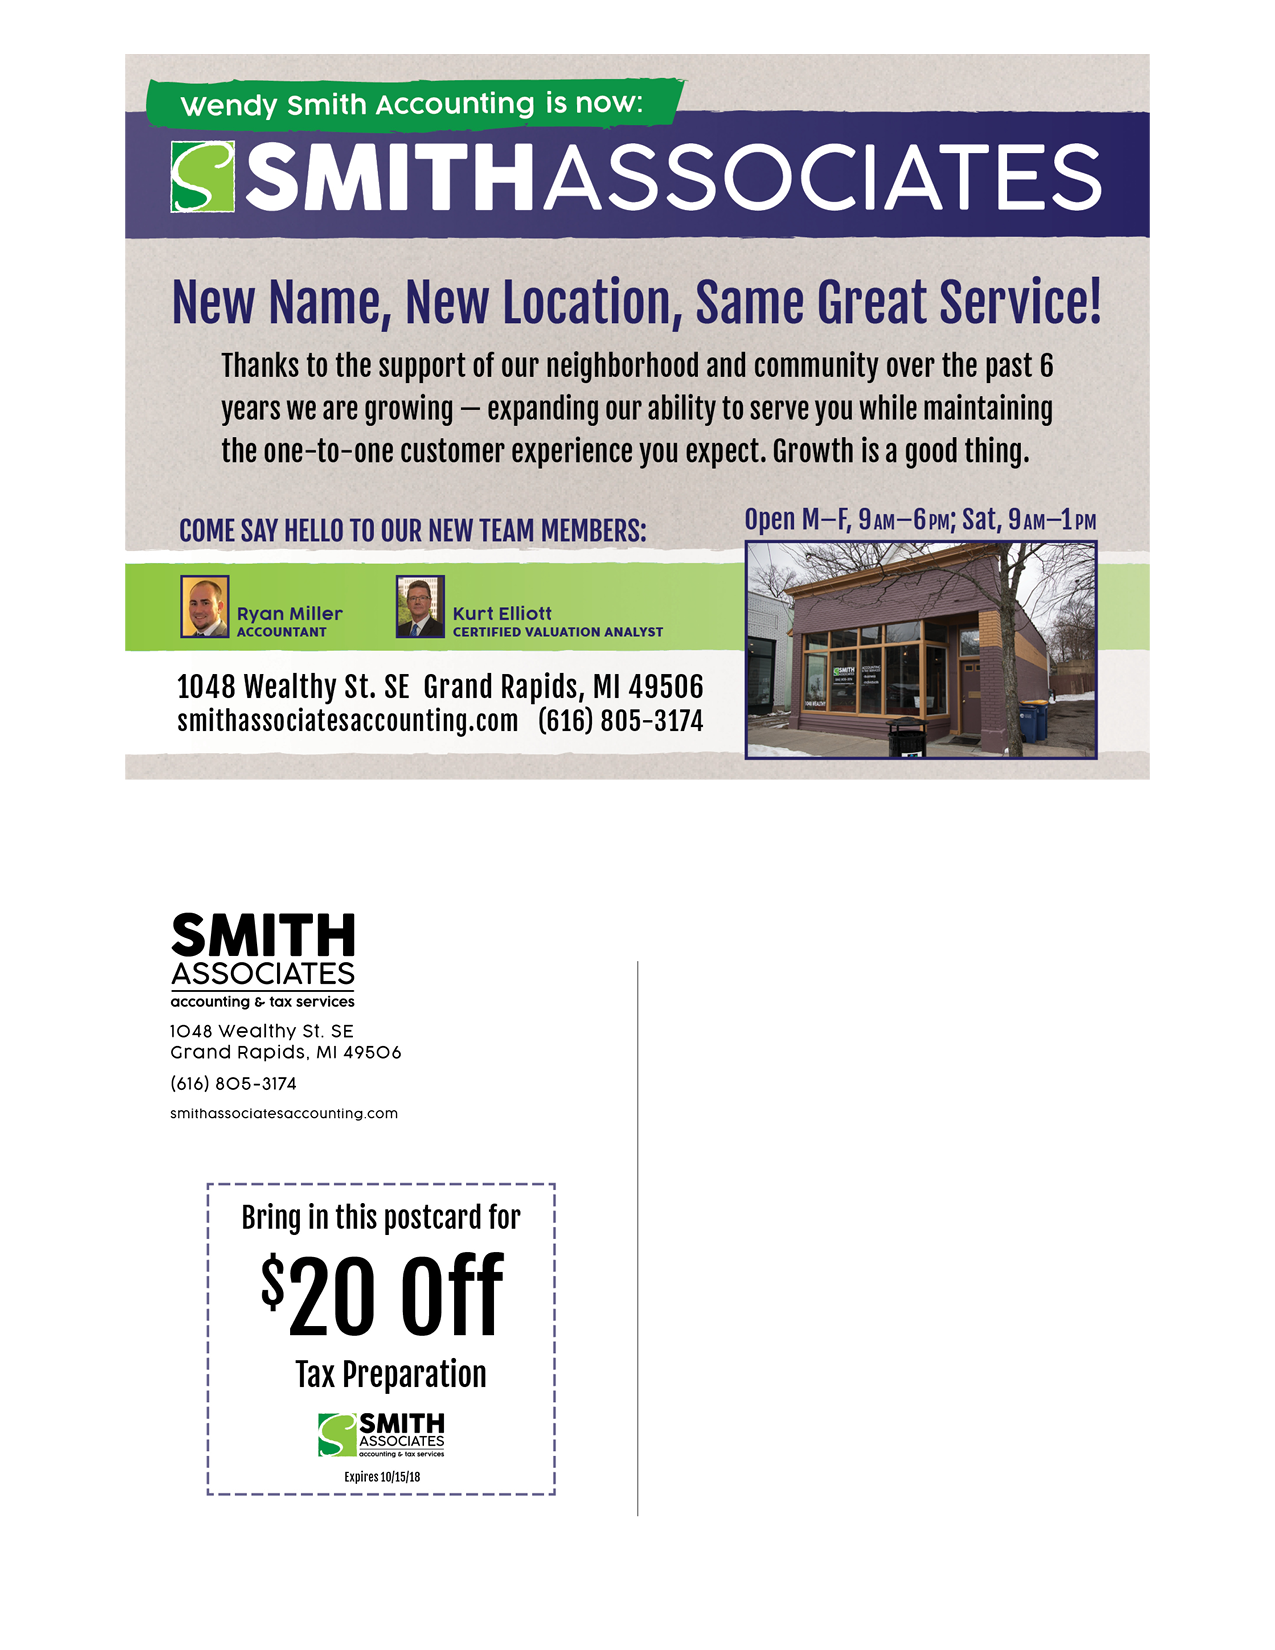 Smith Associates Postcard 2